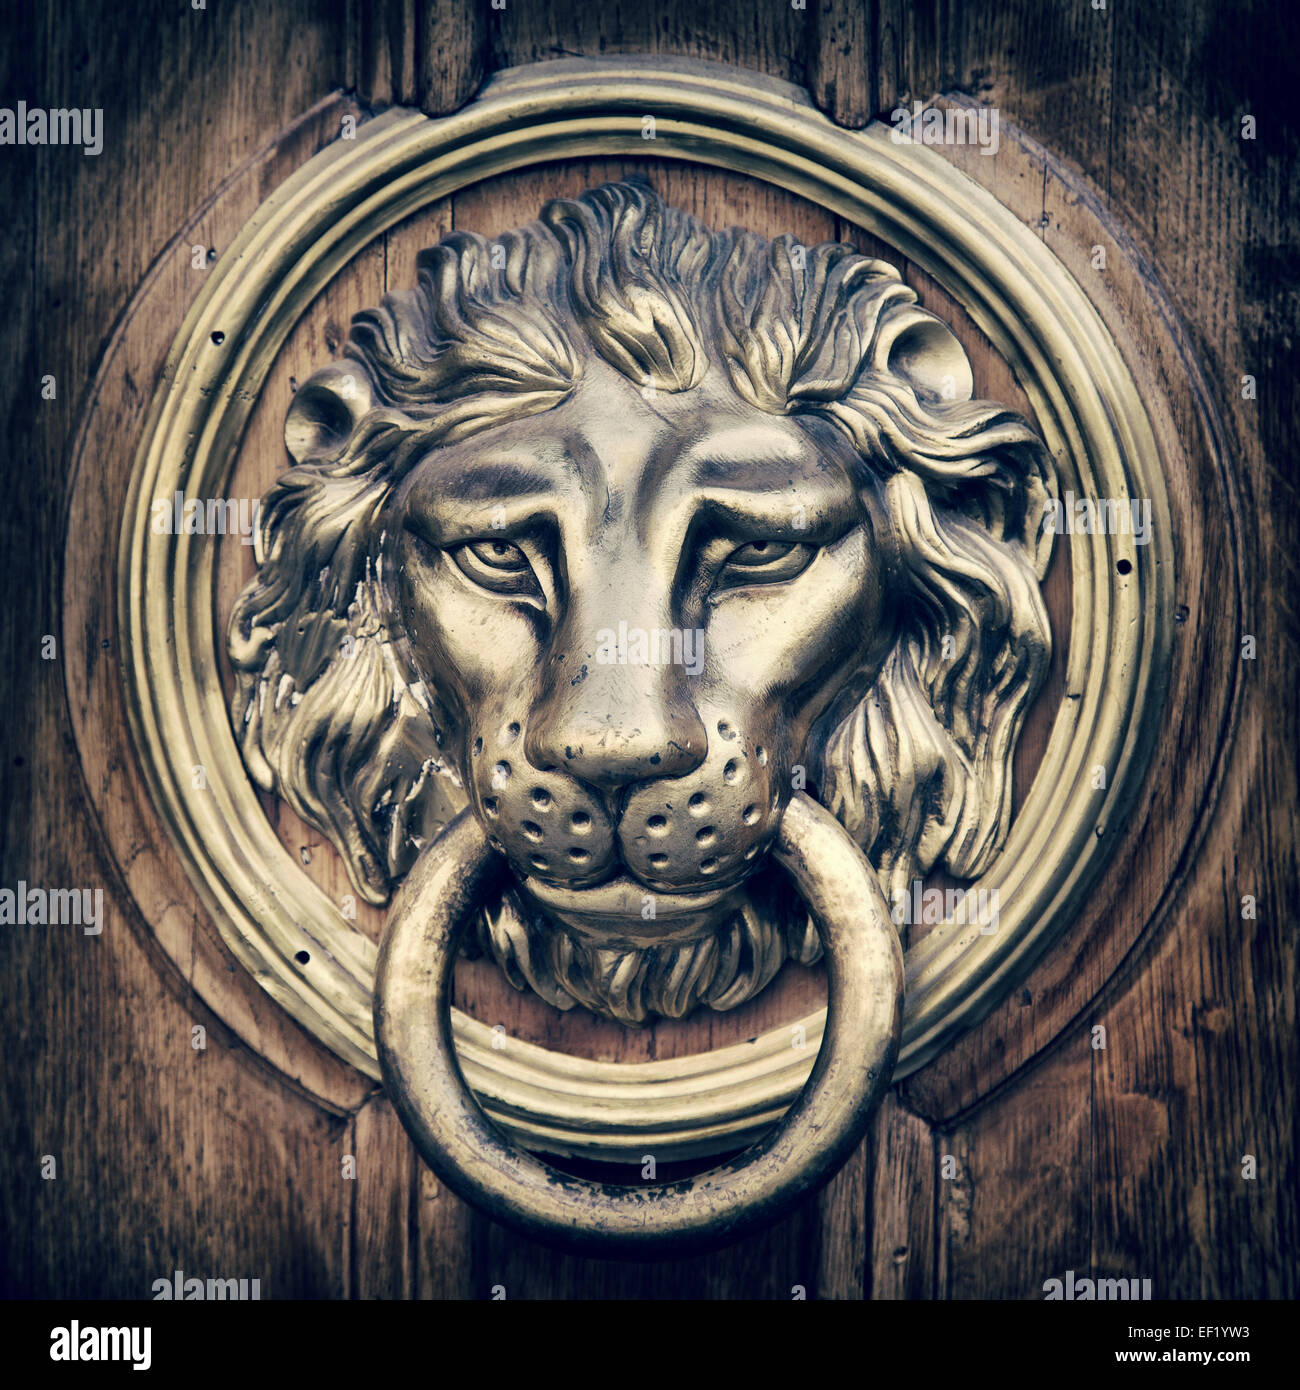 Door knocker, handle - lion head. Vintage stylized photo. Stock Photo